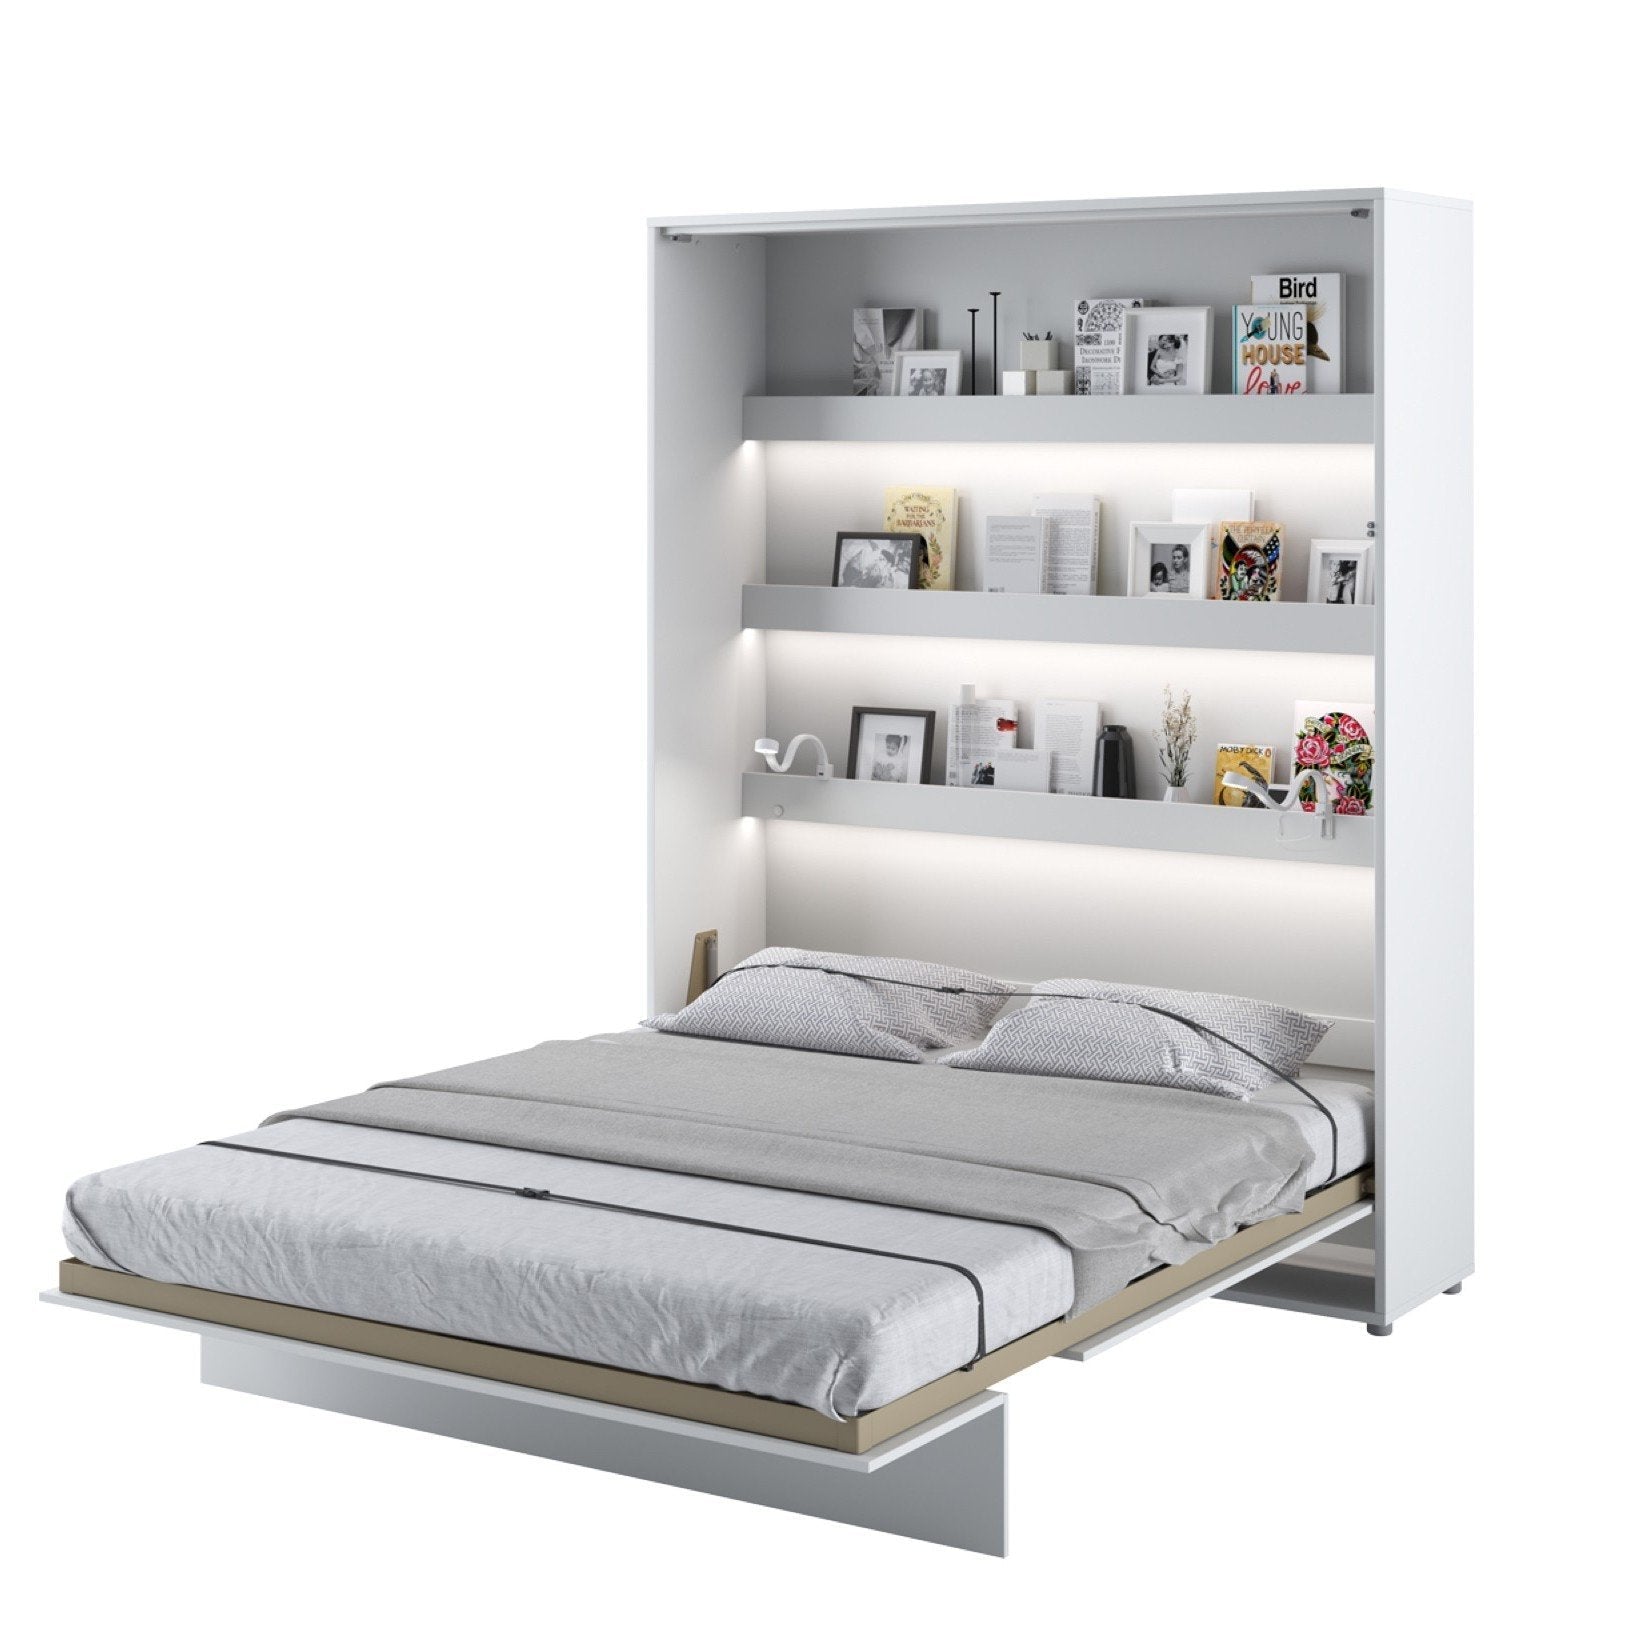 View BC12 Vertical Wall Bed Concept 160cm Murphy Bed White Matt 160 x 200cm information